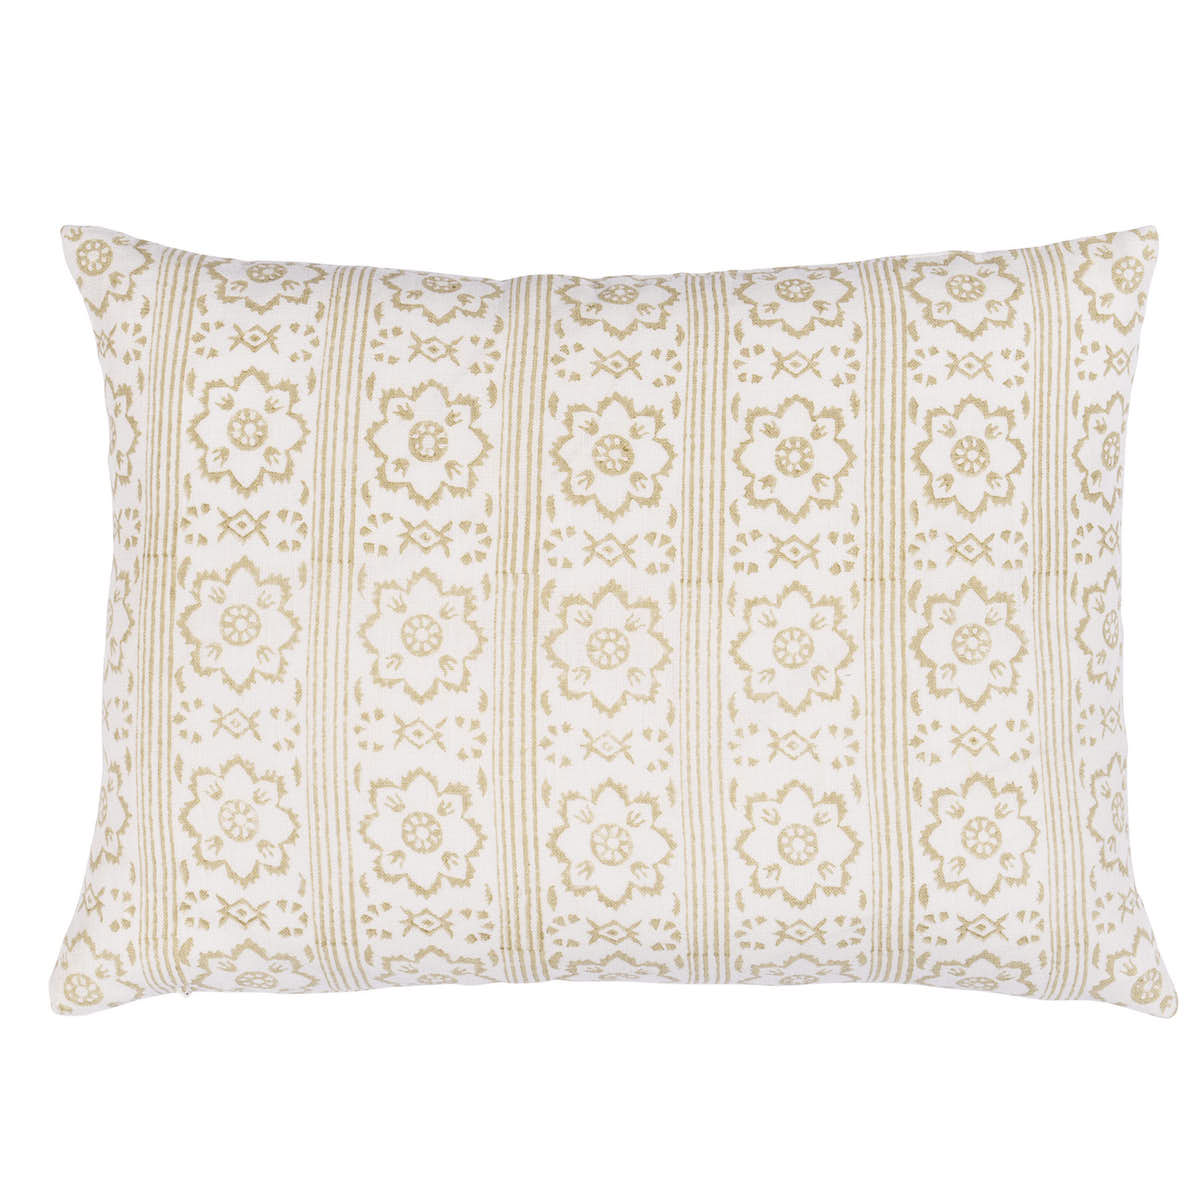 Purchase So18132212 | Sunda Hand Blocked Print Pillow, Neutral - Schumacher Pillows